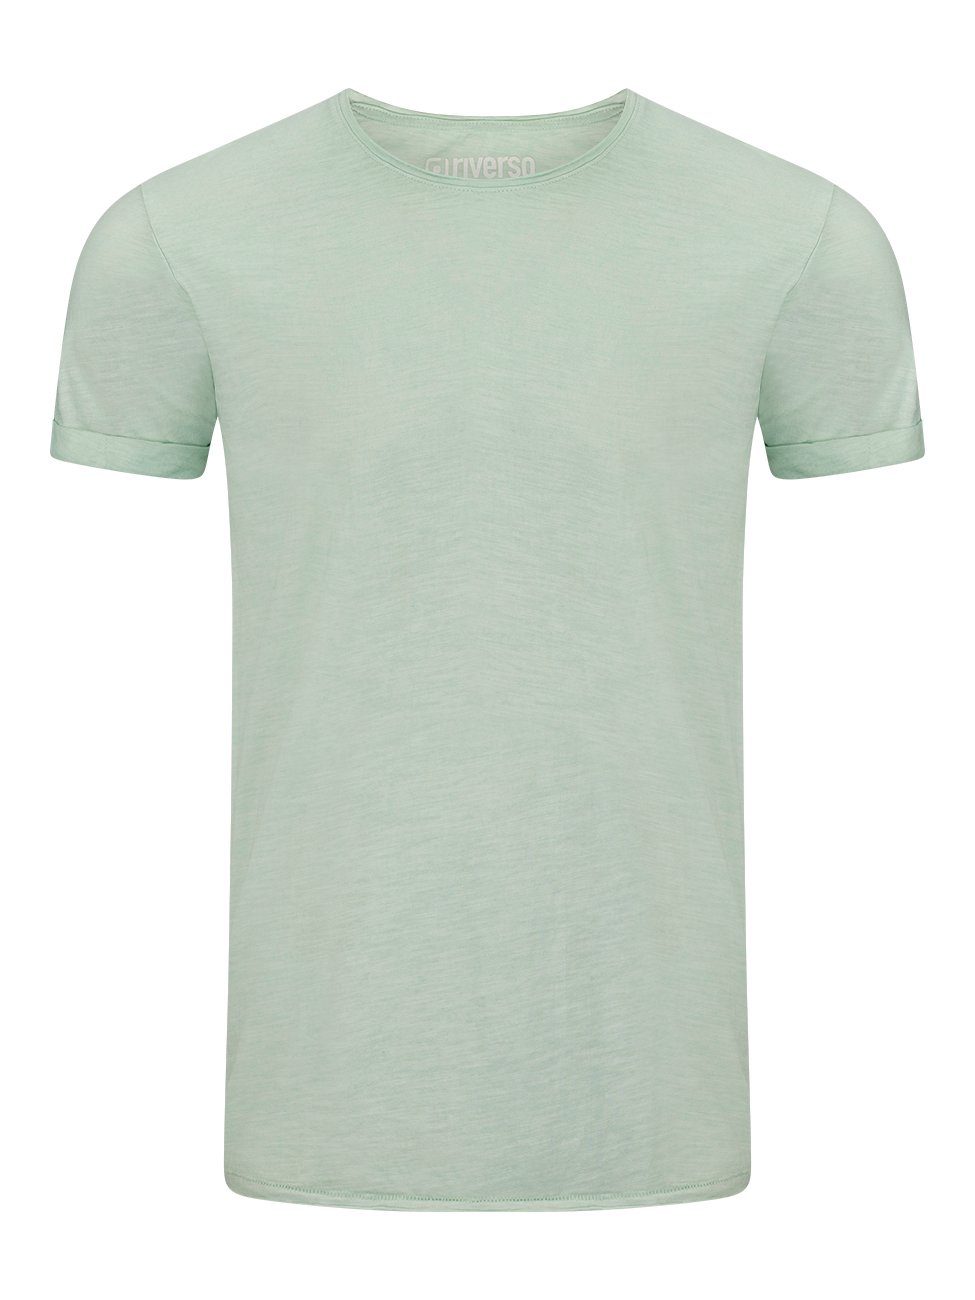 aus RIVMatteo Pack 100% riverso (4-tlg) mit Baumwolle Regular T-Shirt Fit Herren Shirt Rundhalsausschnitt Tee 4 Shirt Kurzarm Basic